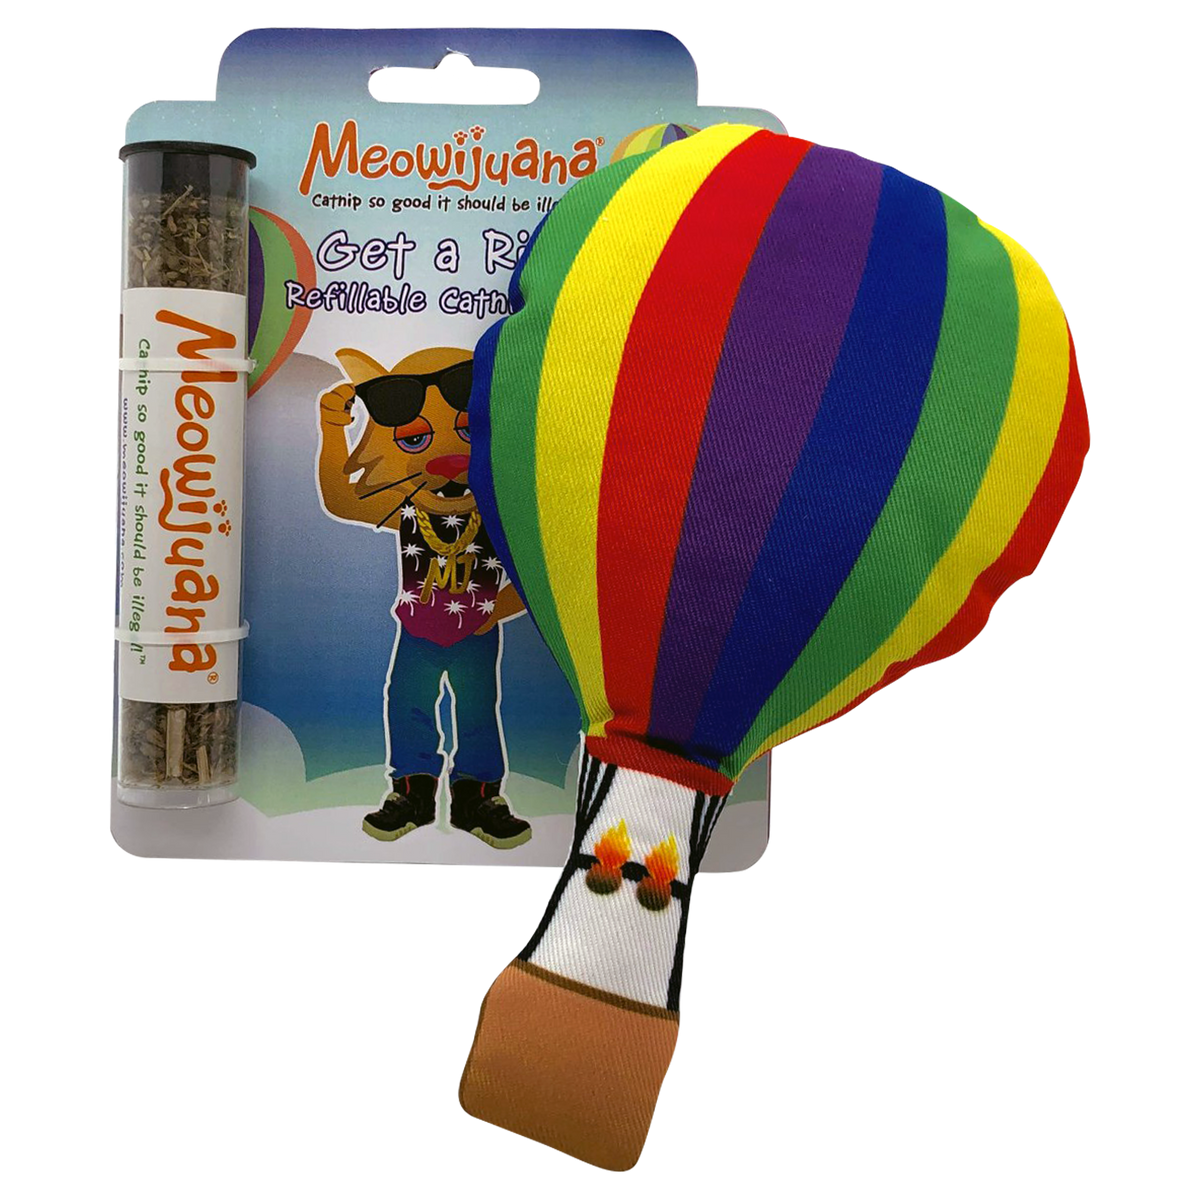 Meowijuana "Get a Rise" Balloon Toy  Image